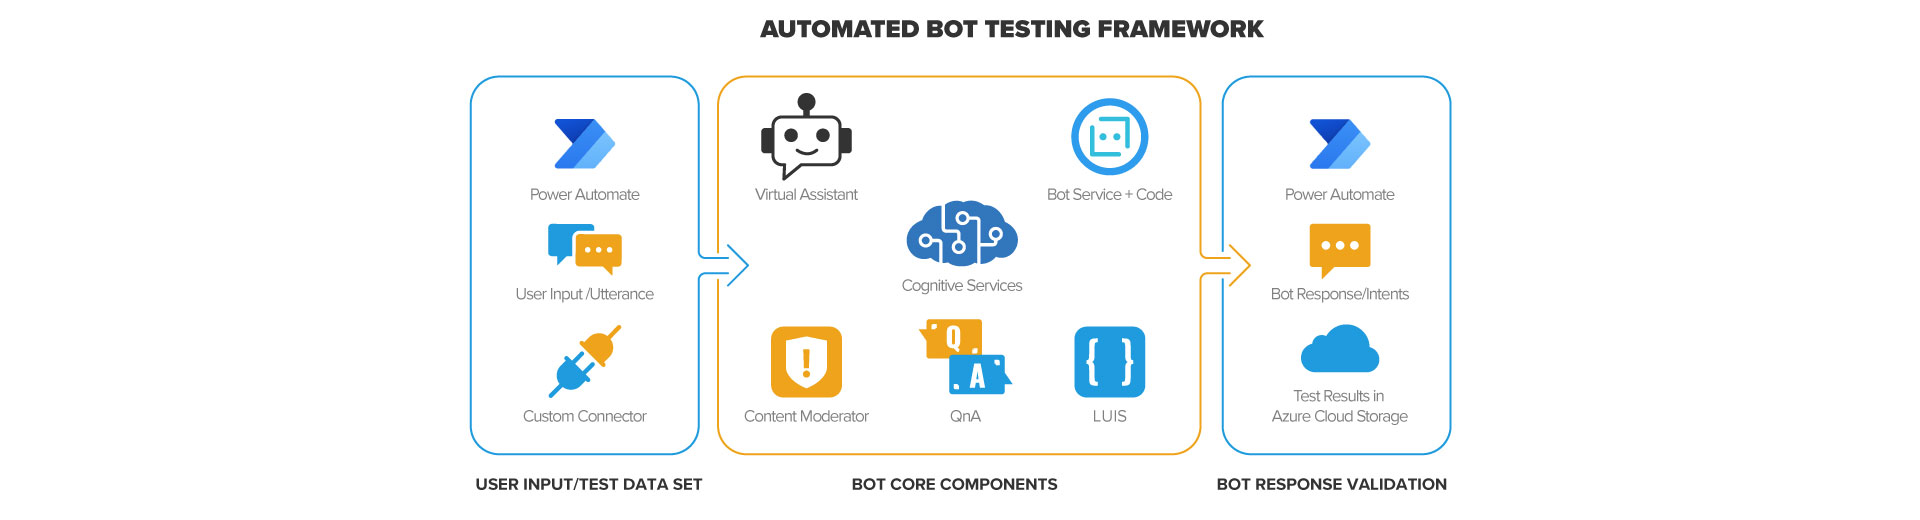 Automated bot testing framework